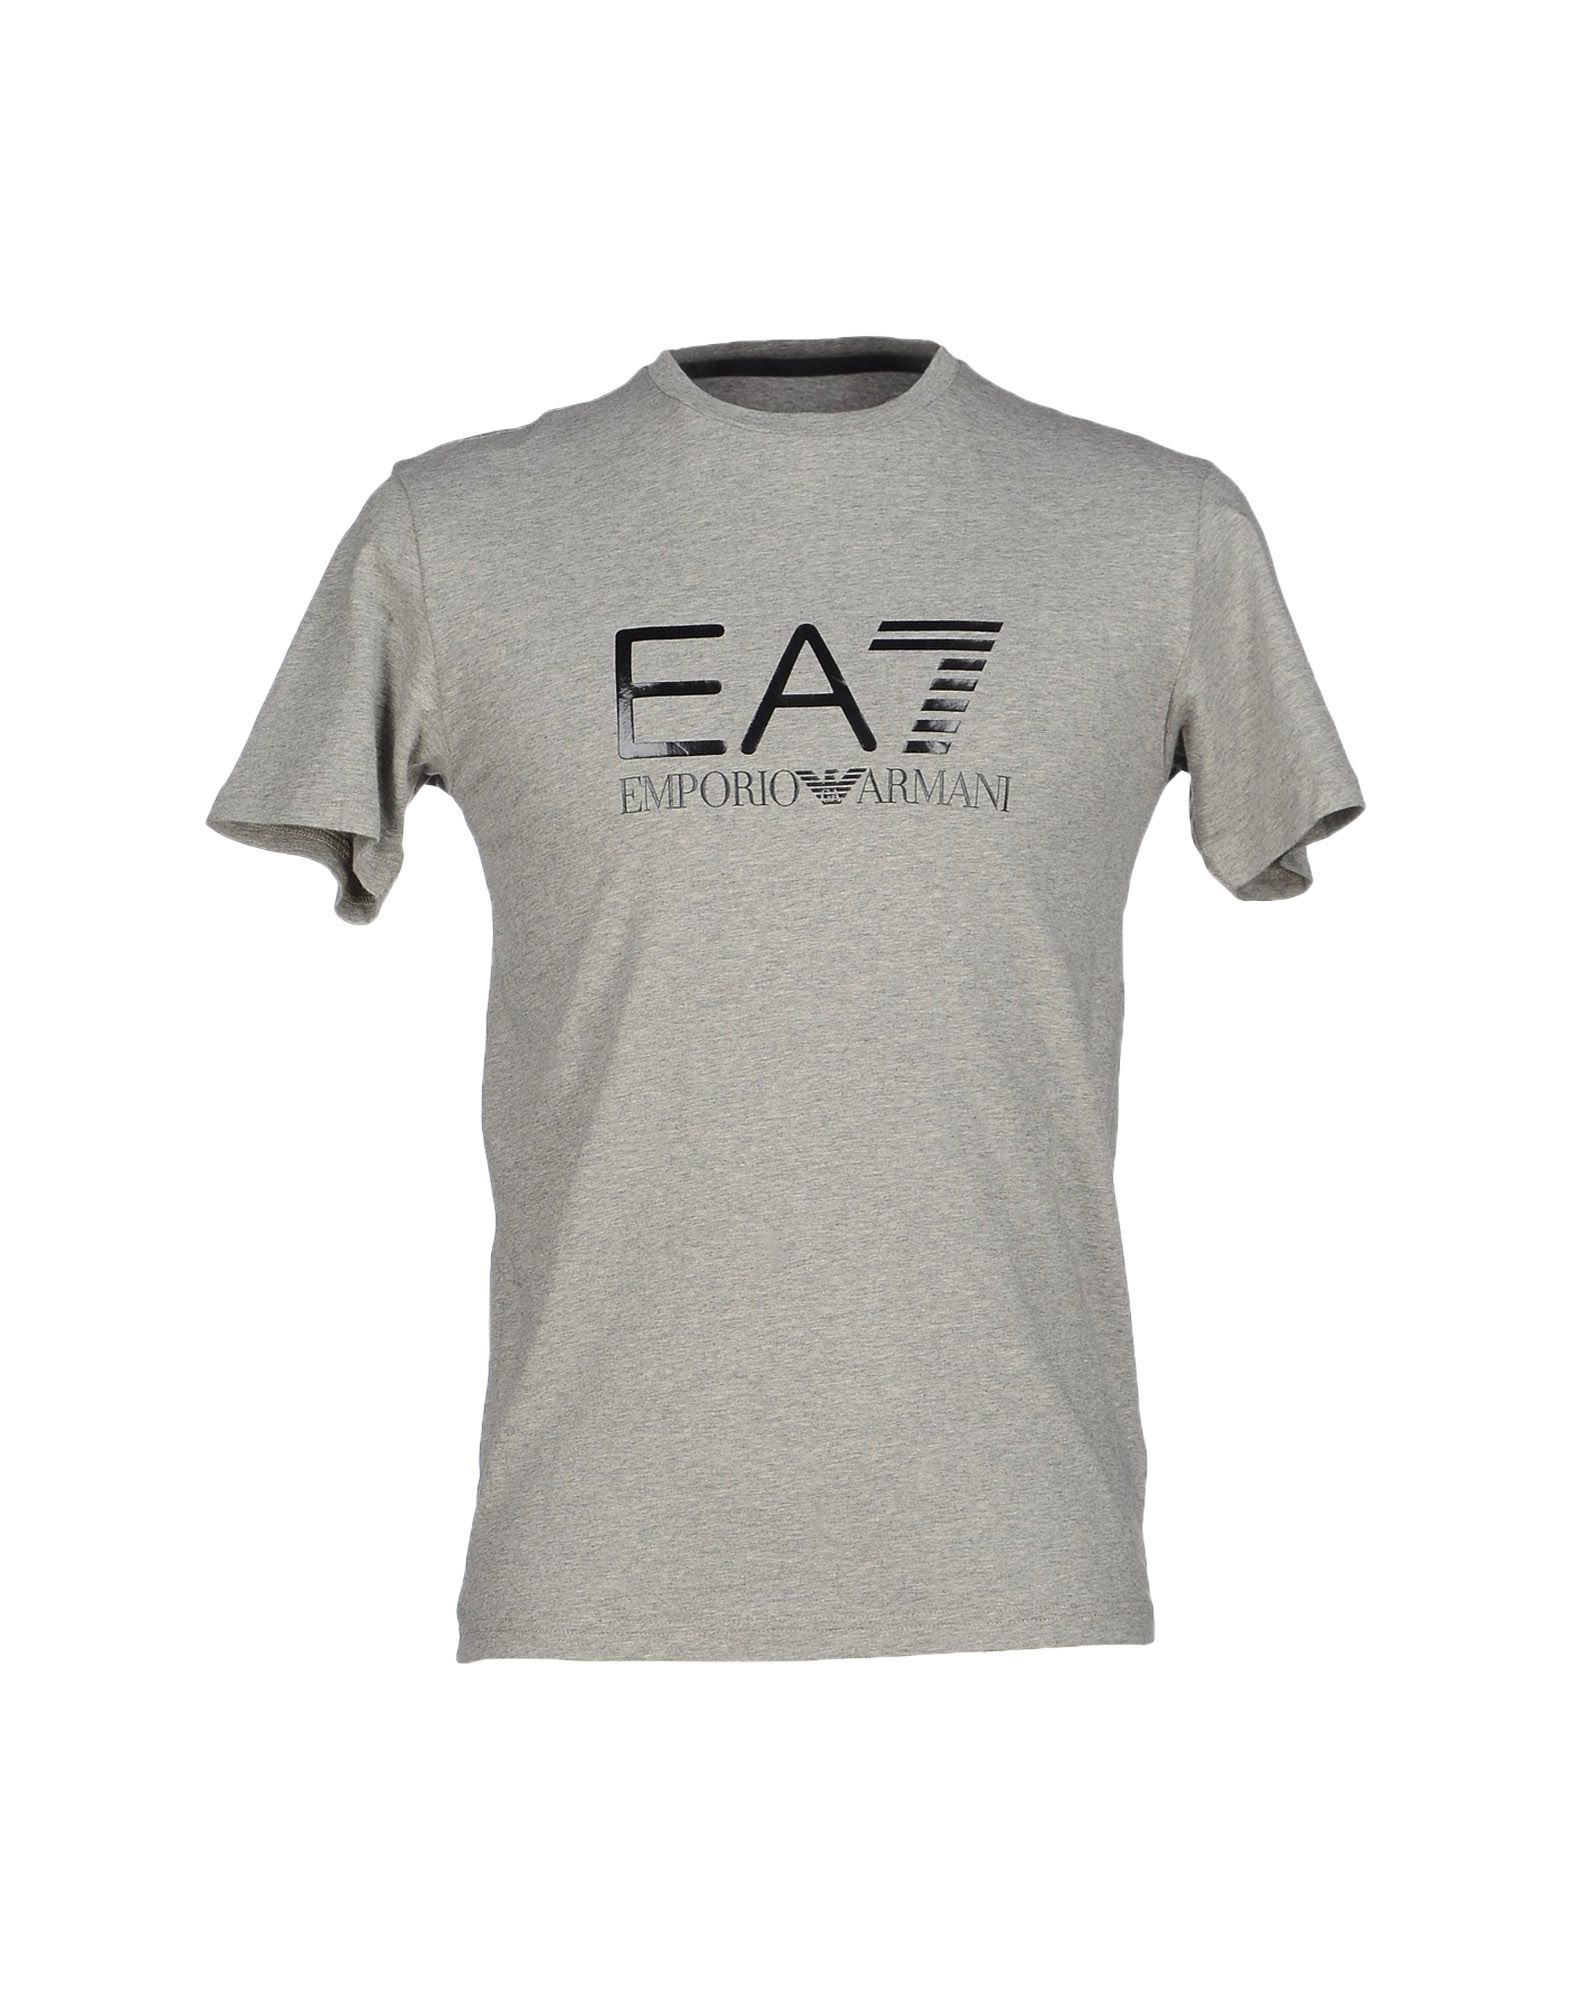 Lyst - Ea7 T-shirt in Gray for Men